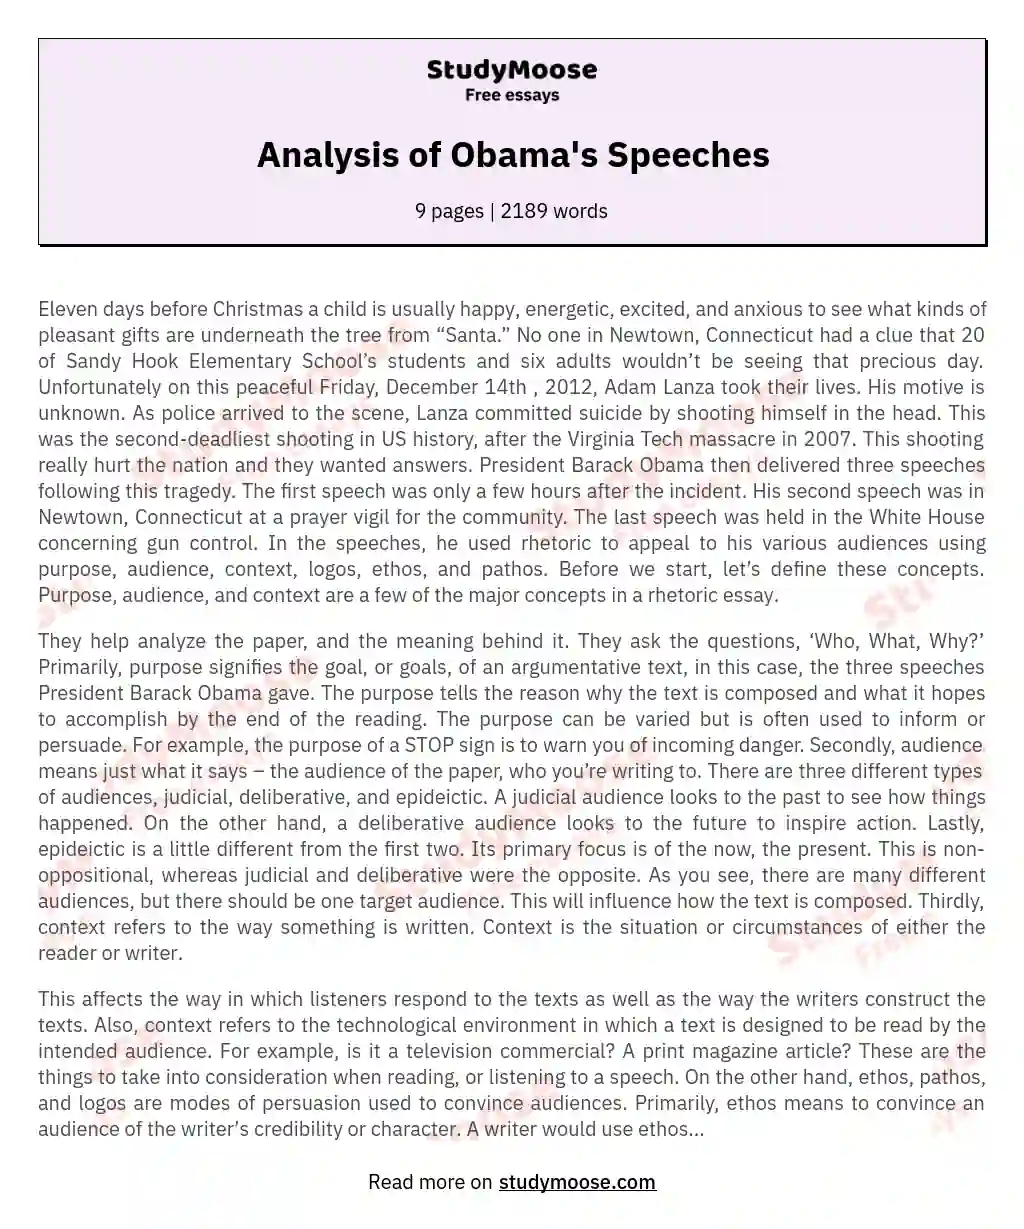 Analysis of Obama's Speeches